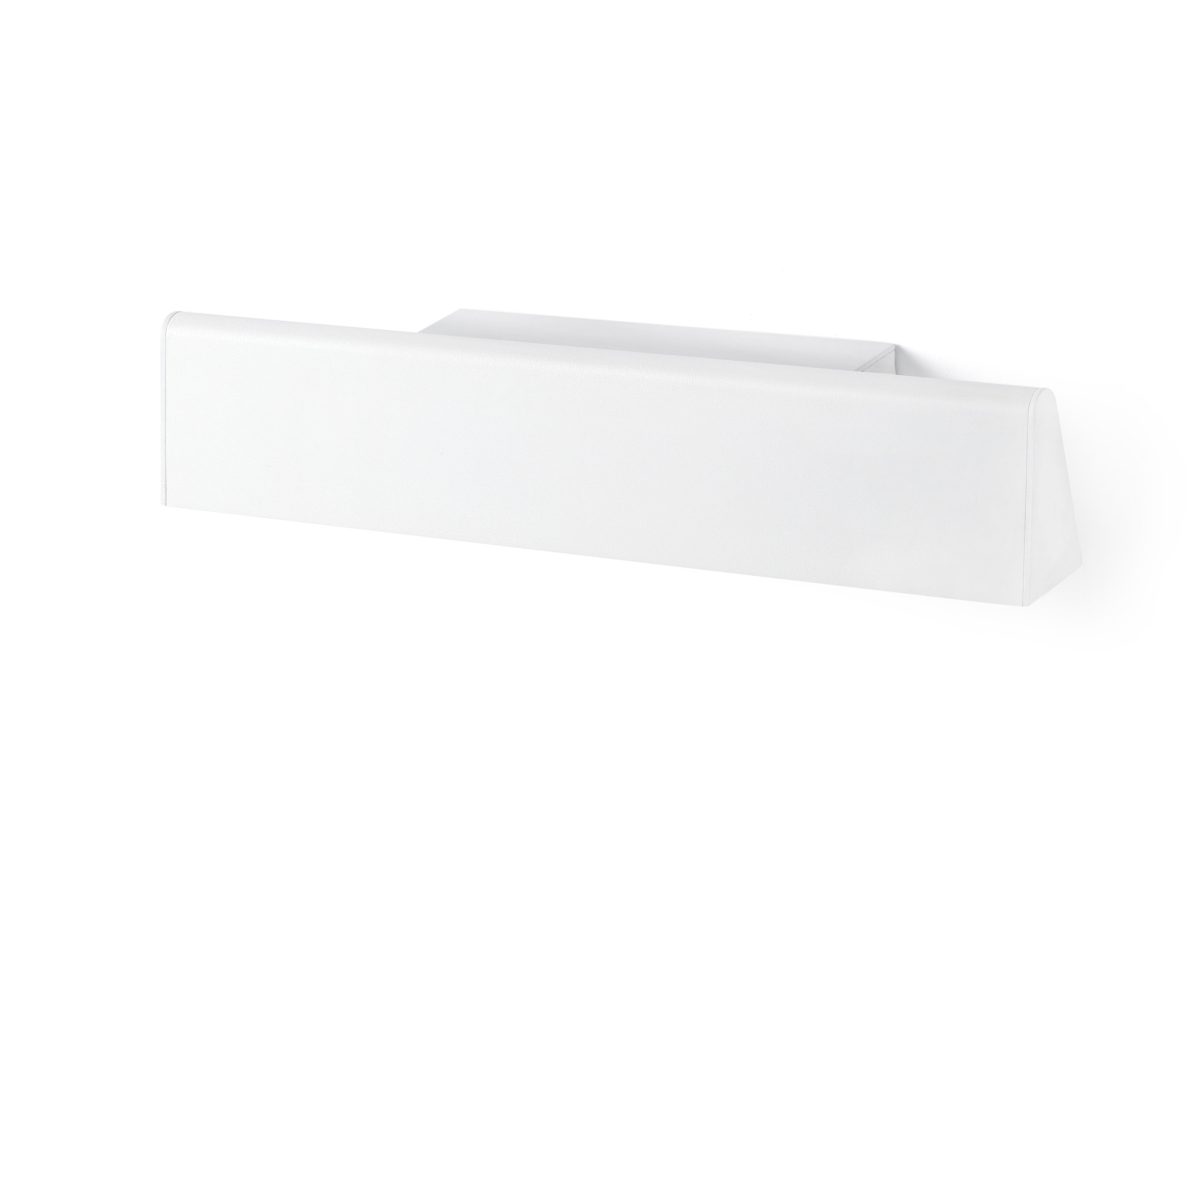 CONIK LED Aplique de Faro. Medidas: L 295 x A 58 x F 65 mm. Color: Blanco